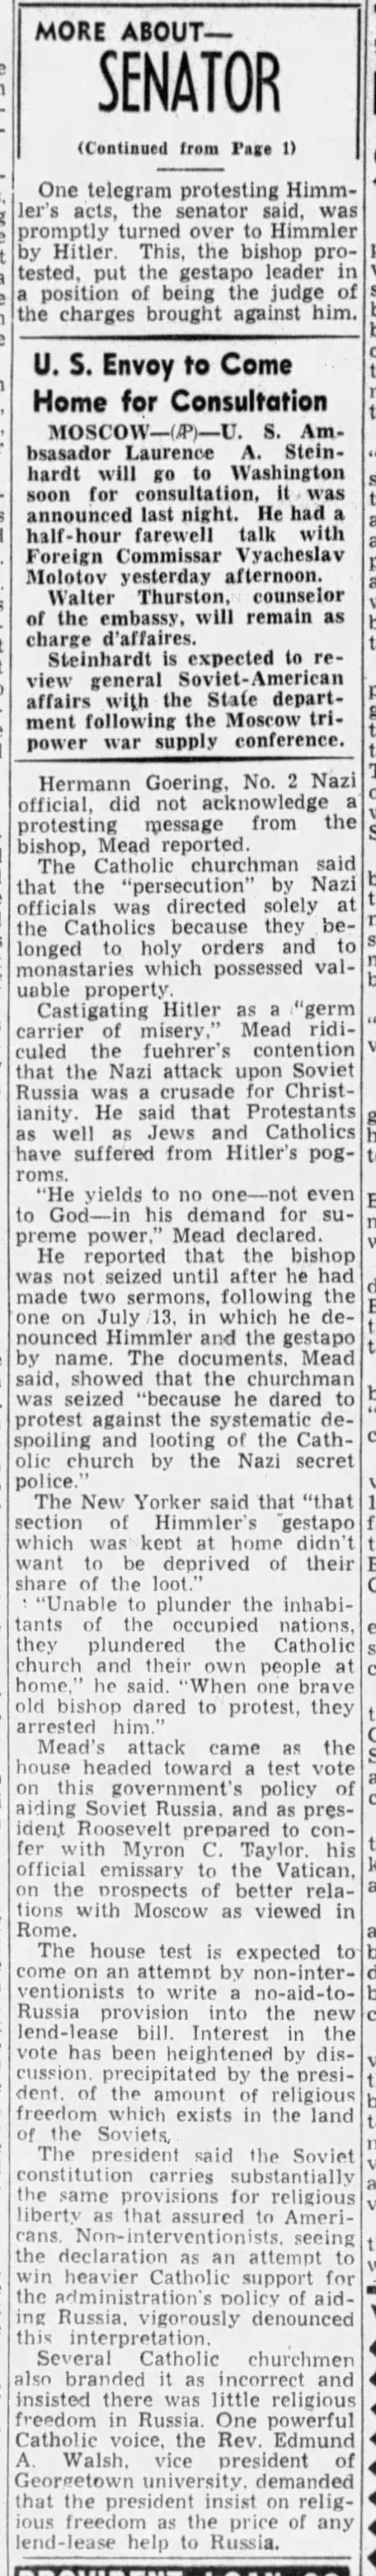 Senator Charges Hitler Destroys Catholic Church